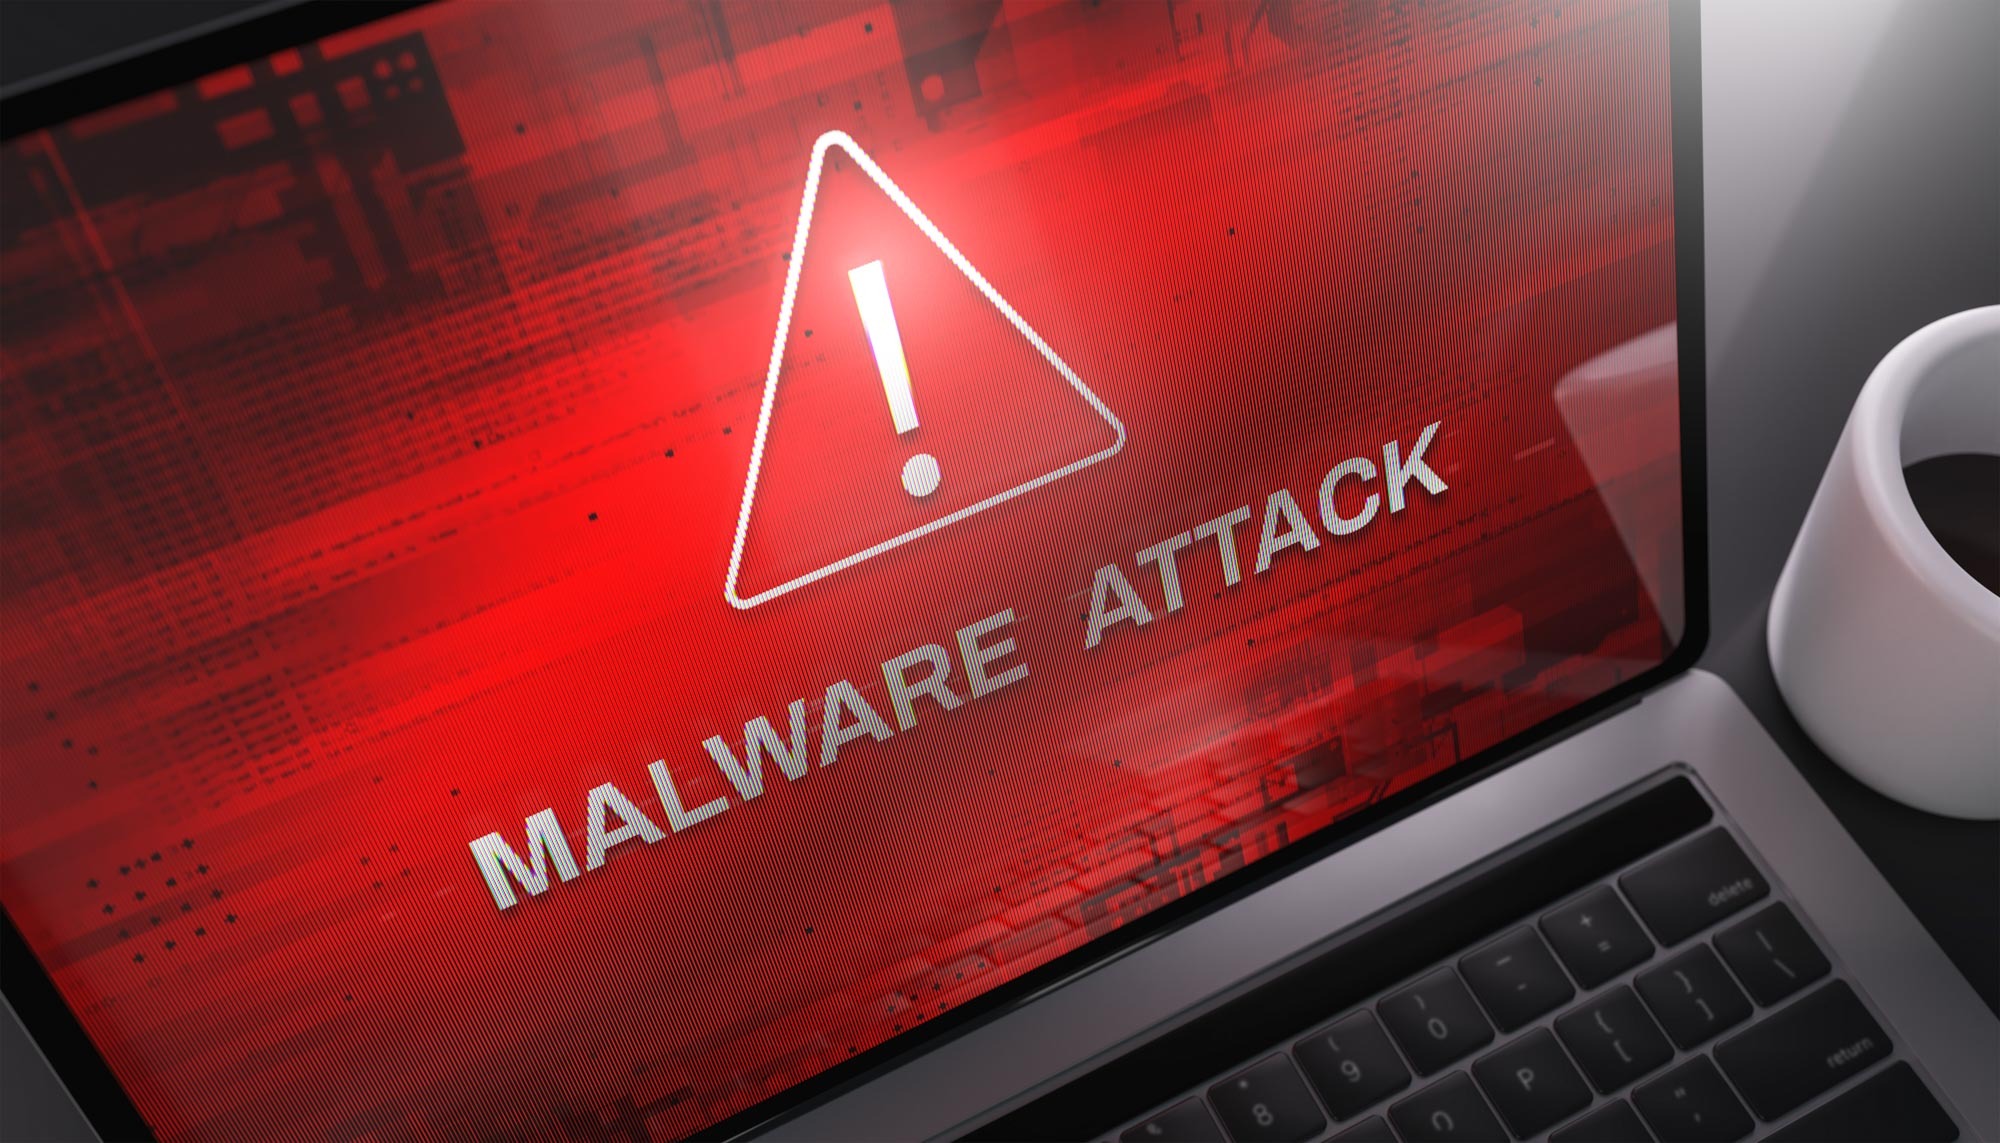 Malware warning on a Mac